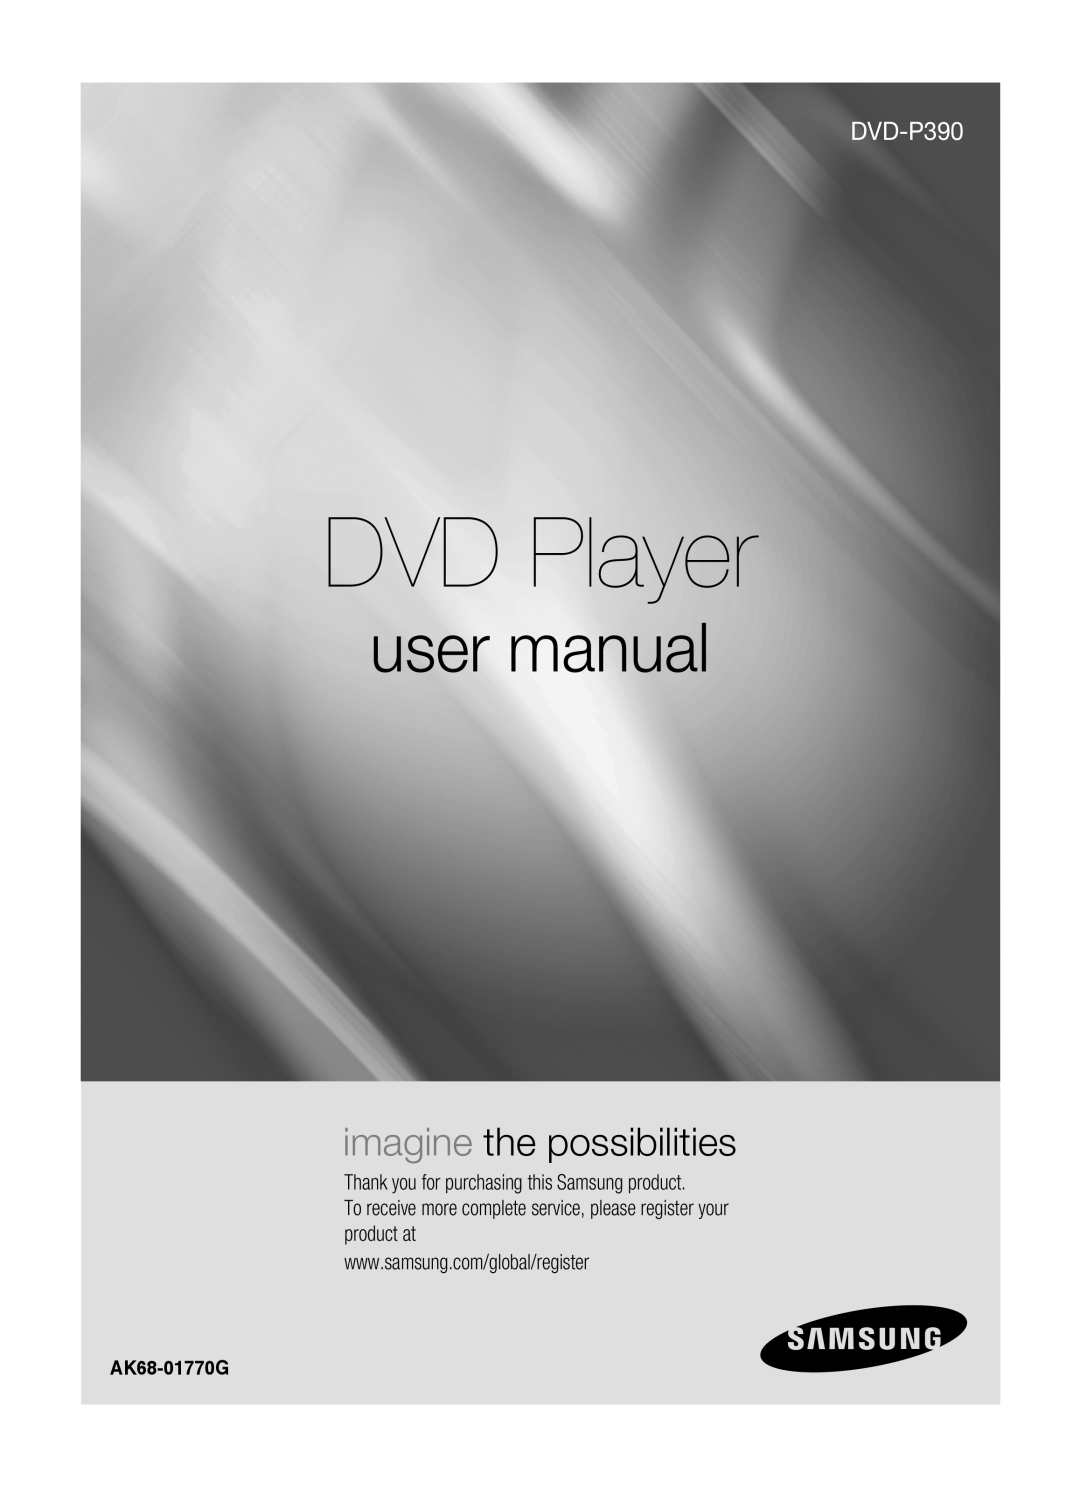 Samsung AK68-01770G user manual DVD Player, imagine the possibilities, DVD-P390 